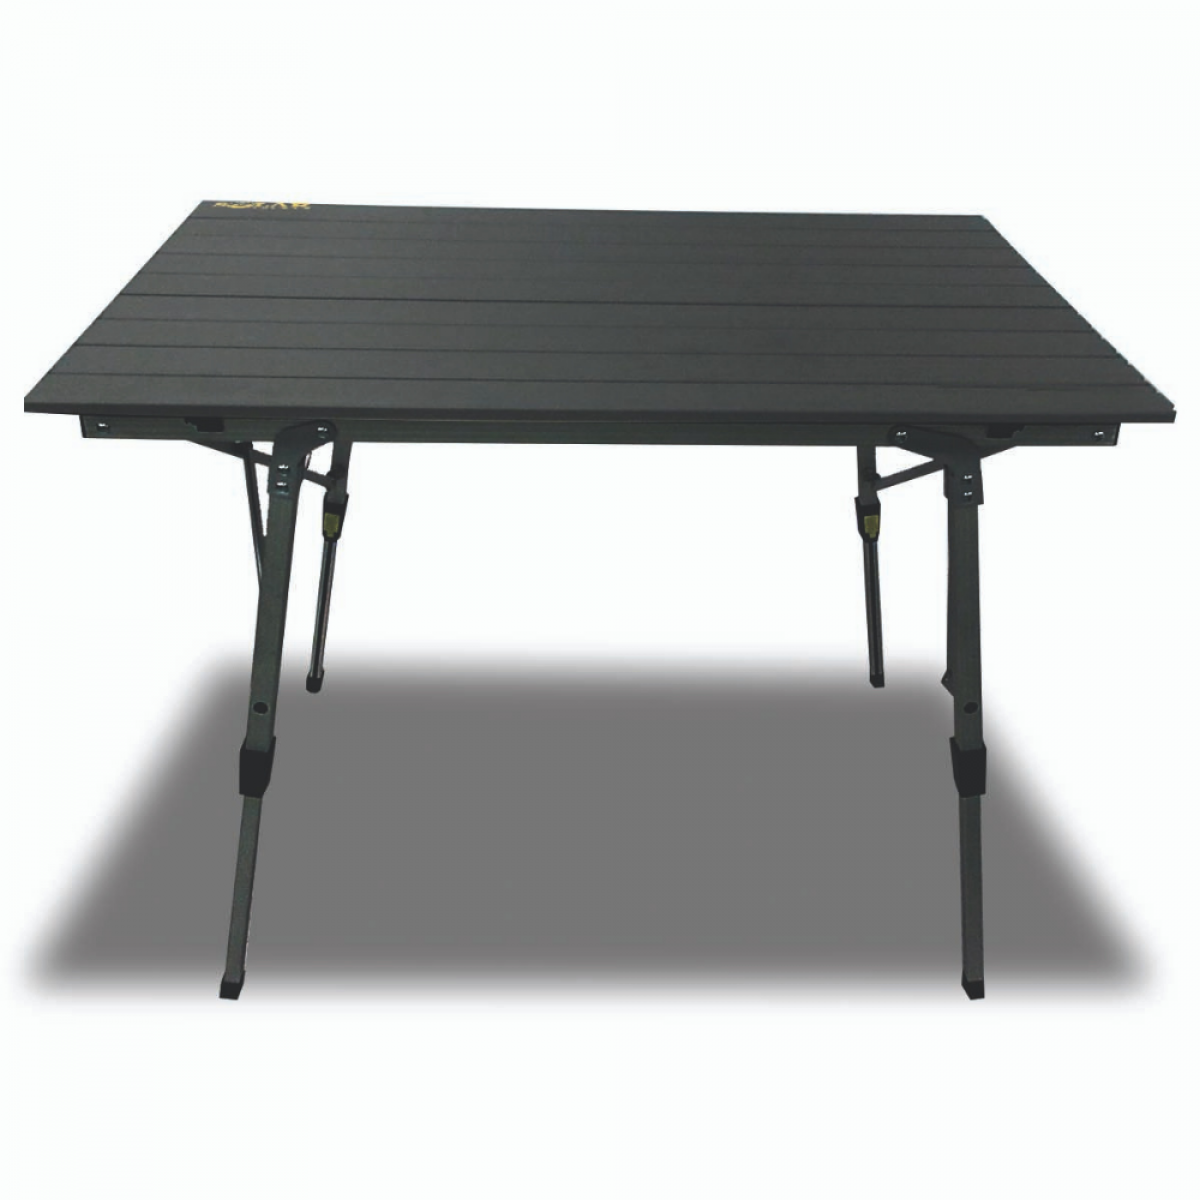 20942-solar-a1-aluminium-folding-table-rockworld-sklep-dla-karpiarzy